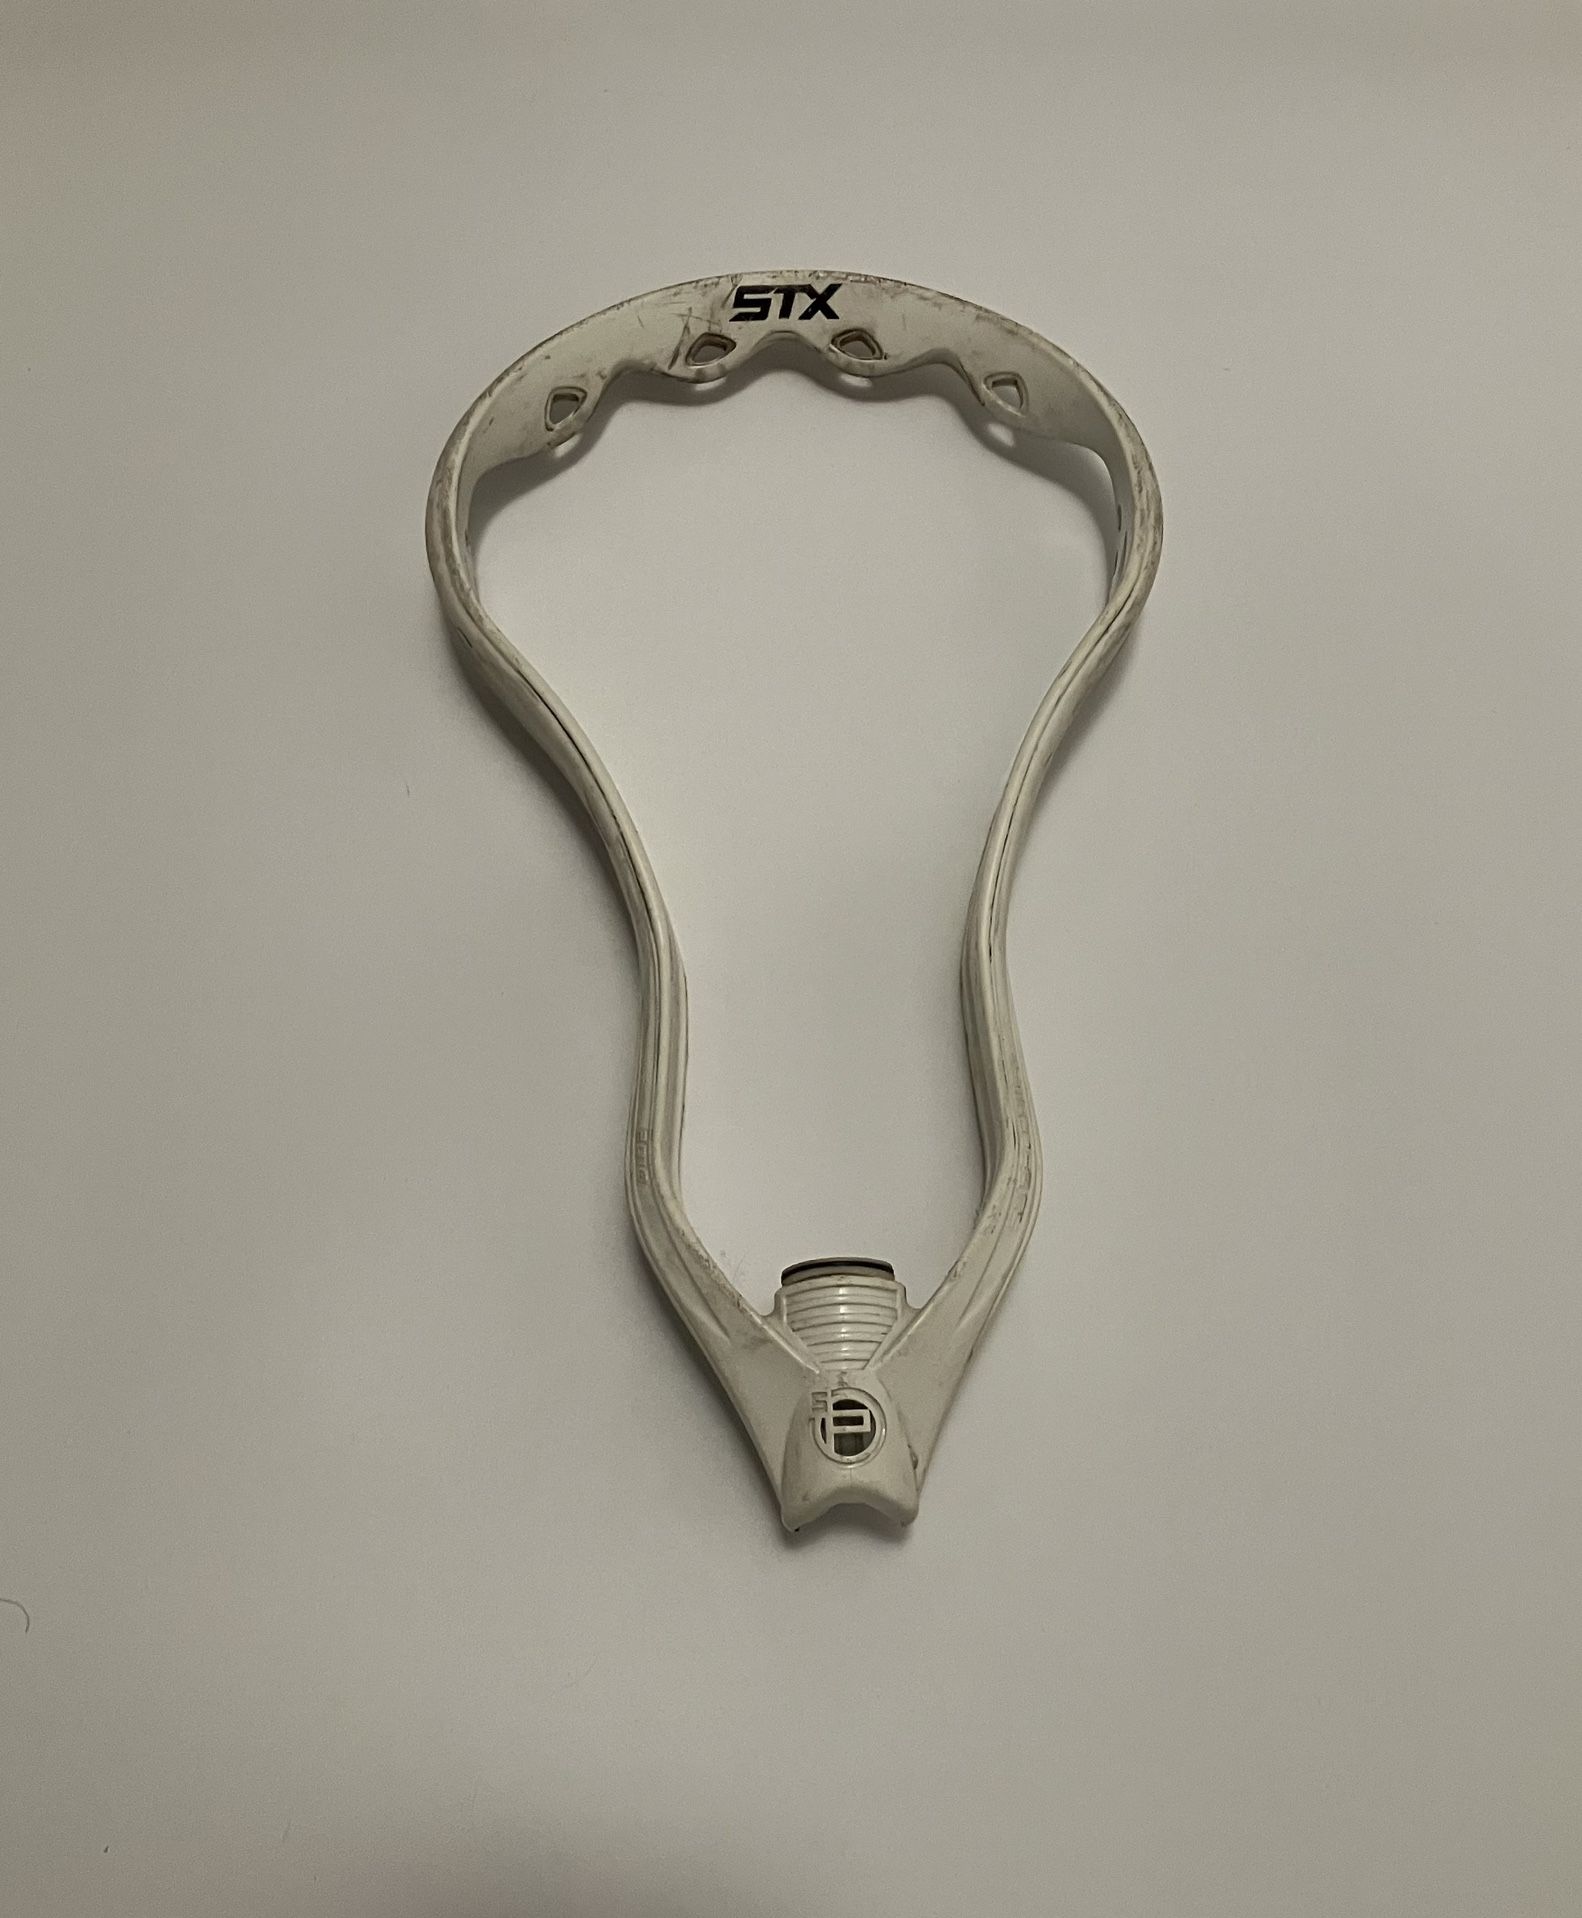 STX Super Power Lacrosse Head For Sale Or Trade